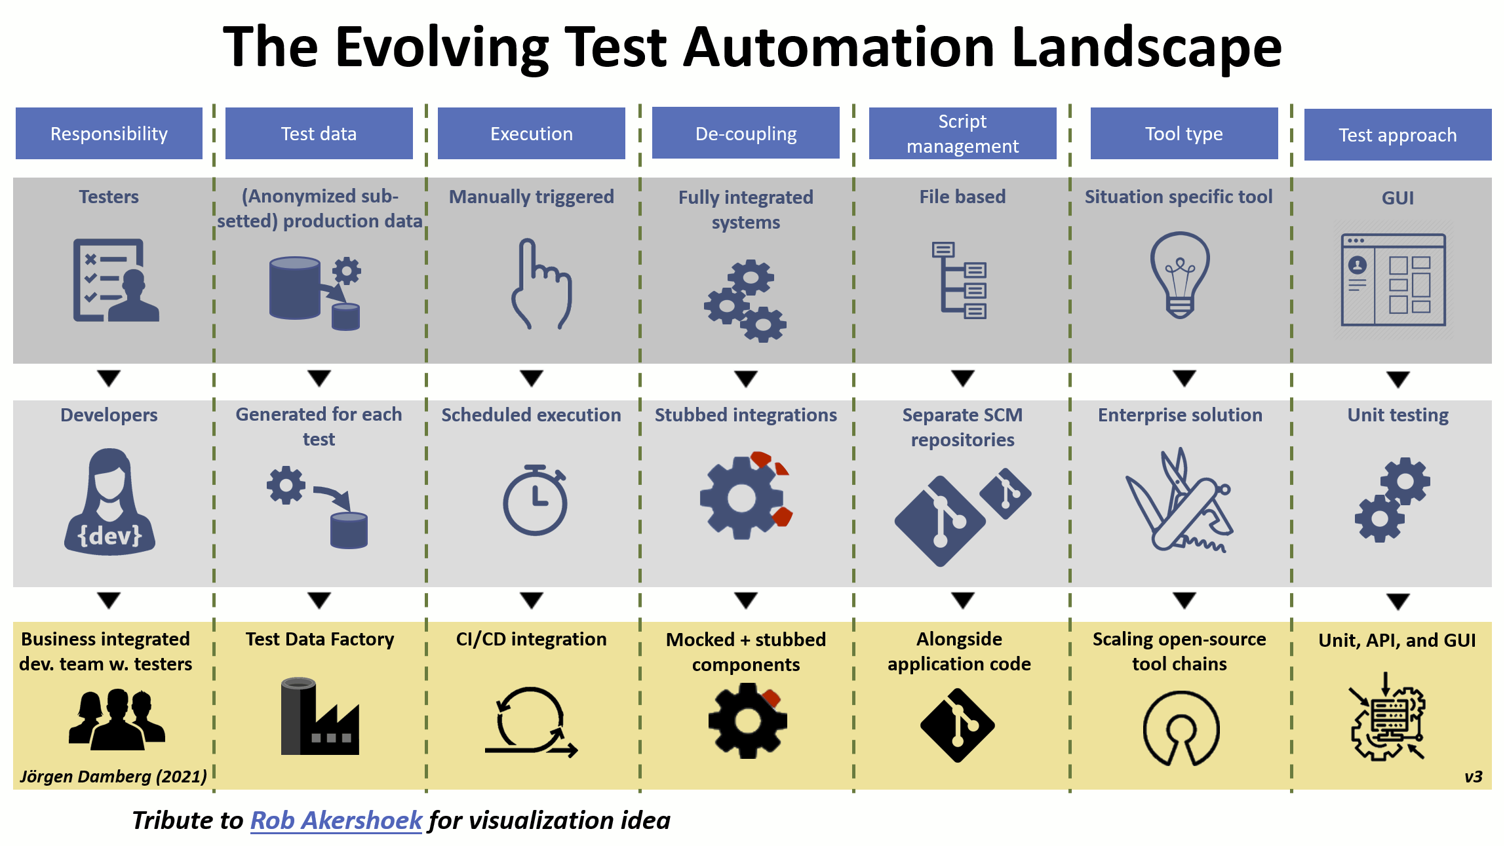 The evolving test automation landscape